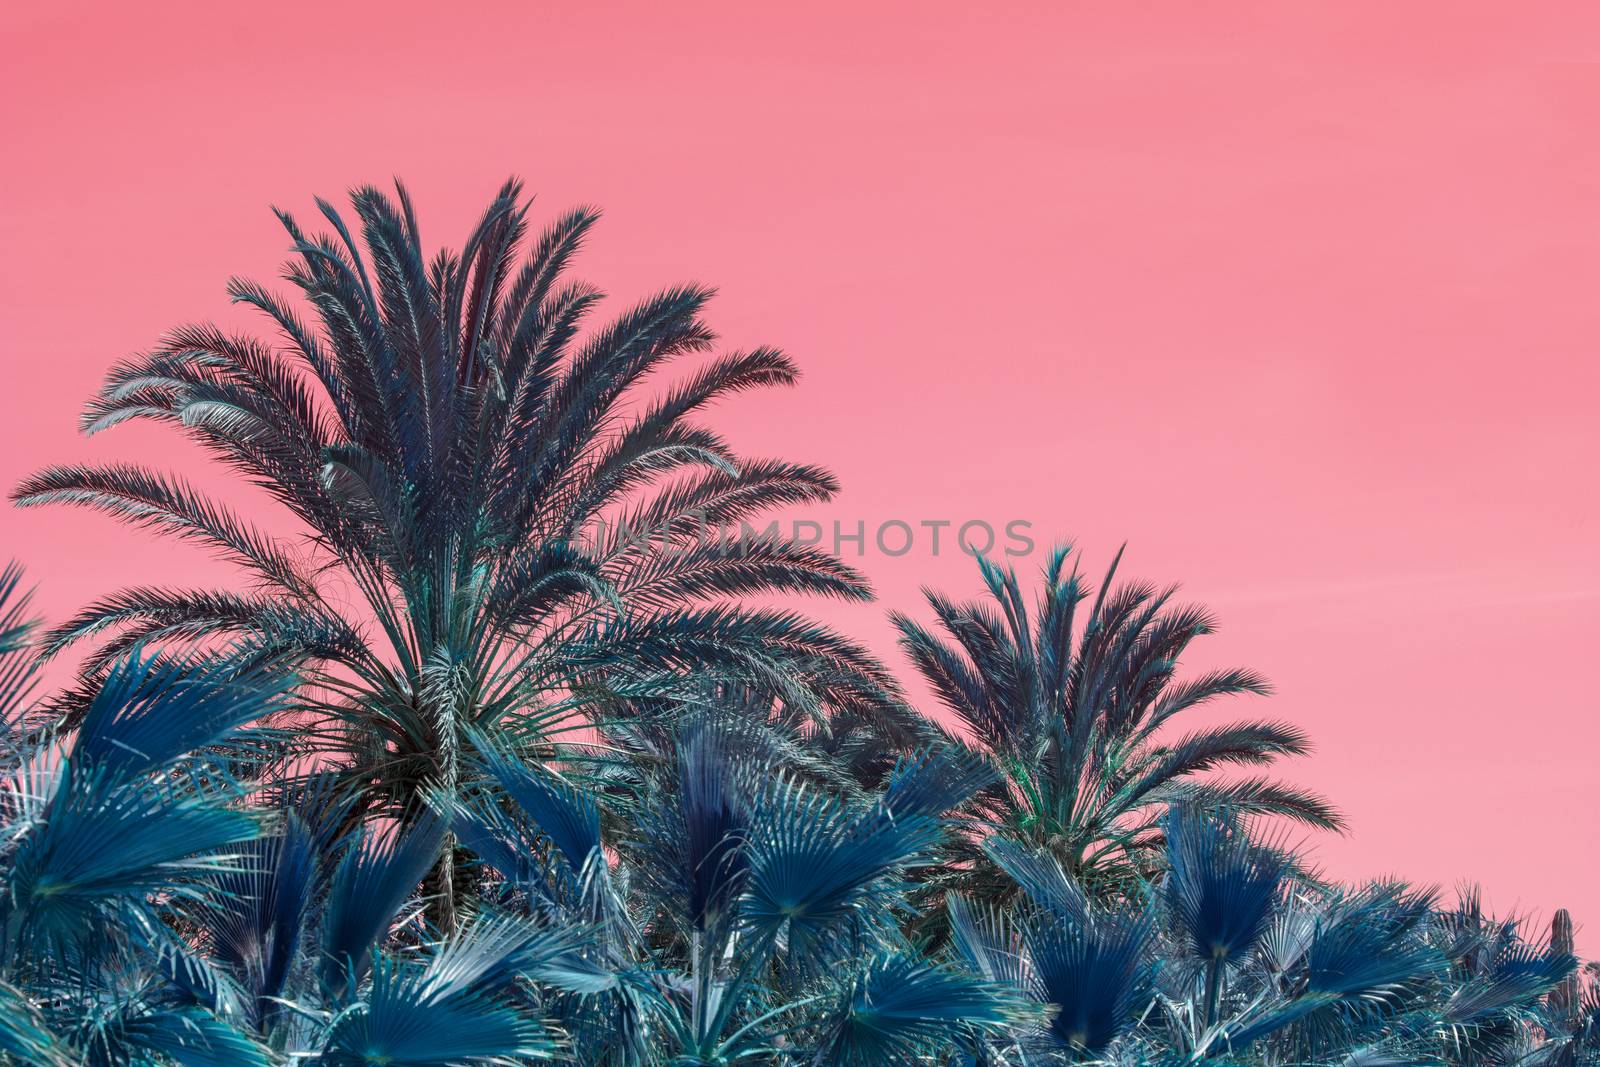 Surrealistic abstract Mallorca endemic fan palm Chamaerops humilis lush leaves against pink skies